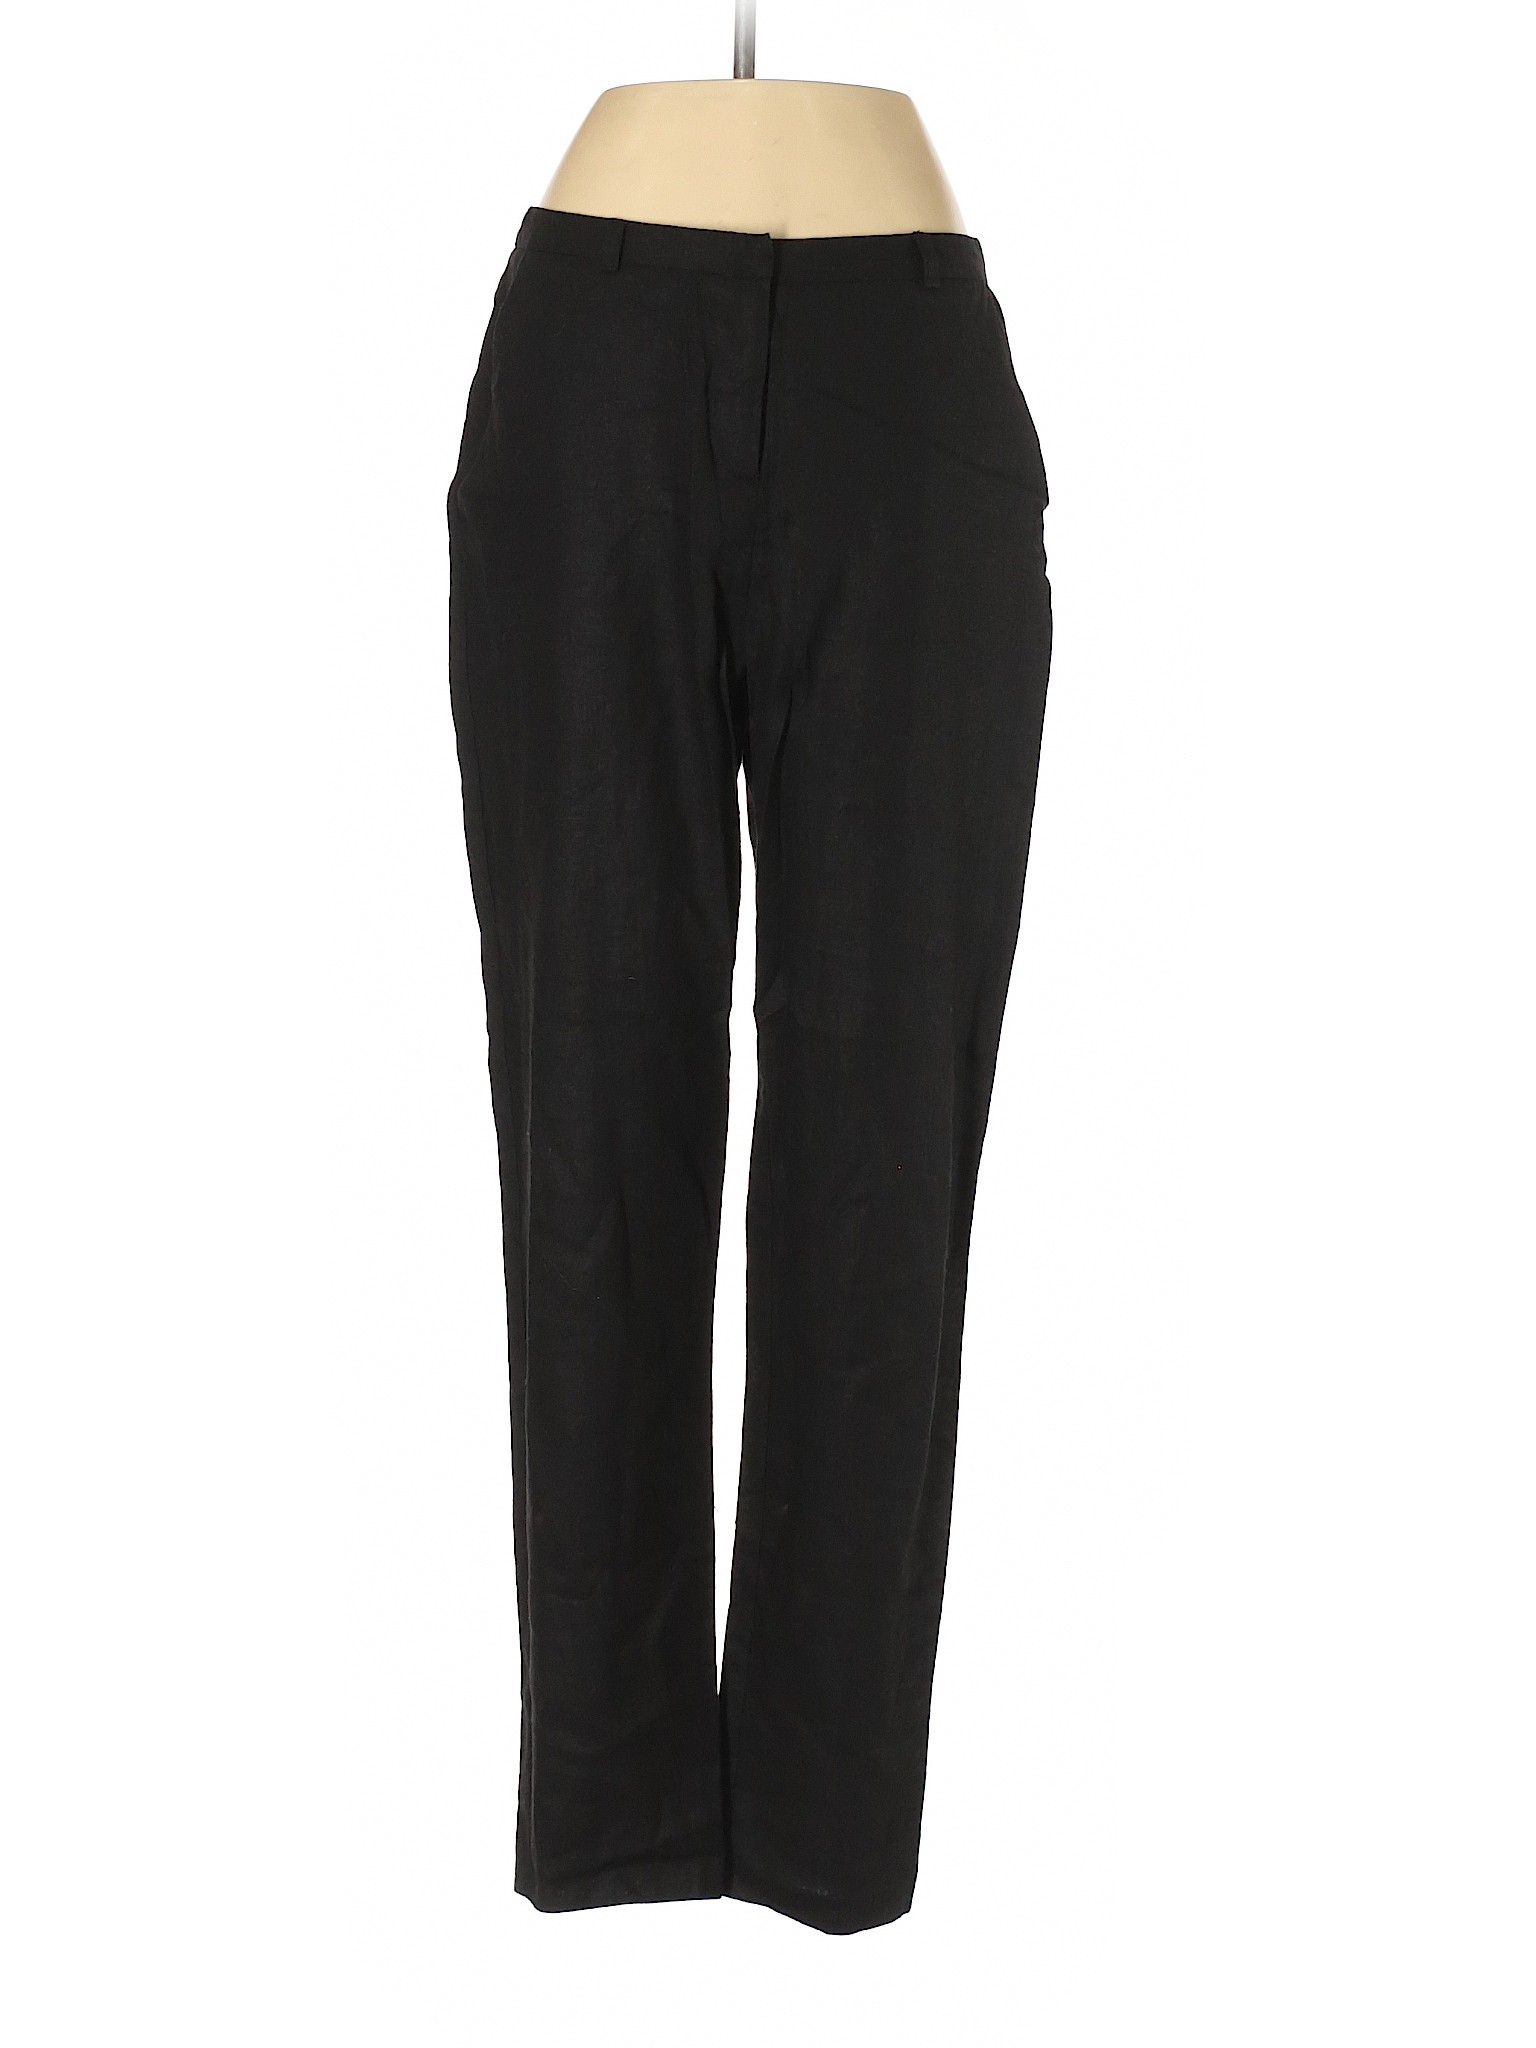 ASOS Women Black Dress Pants 4 | eBay